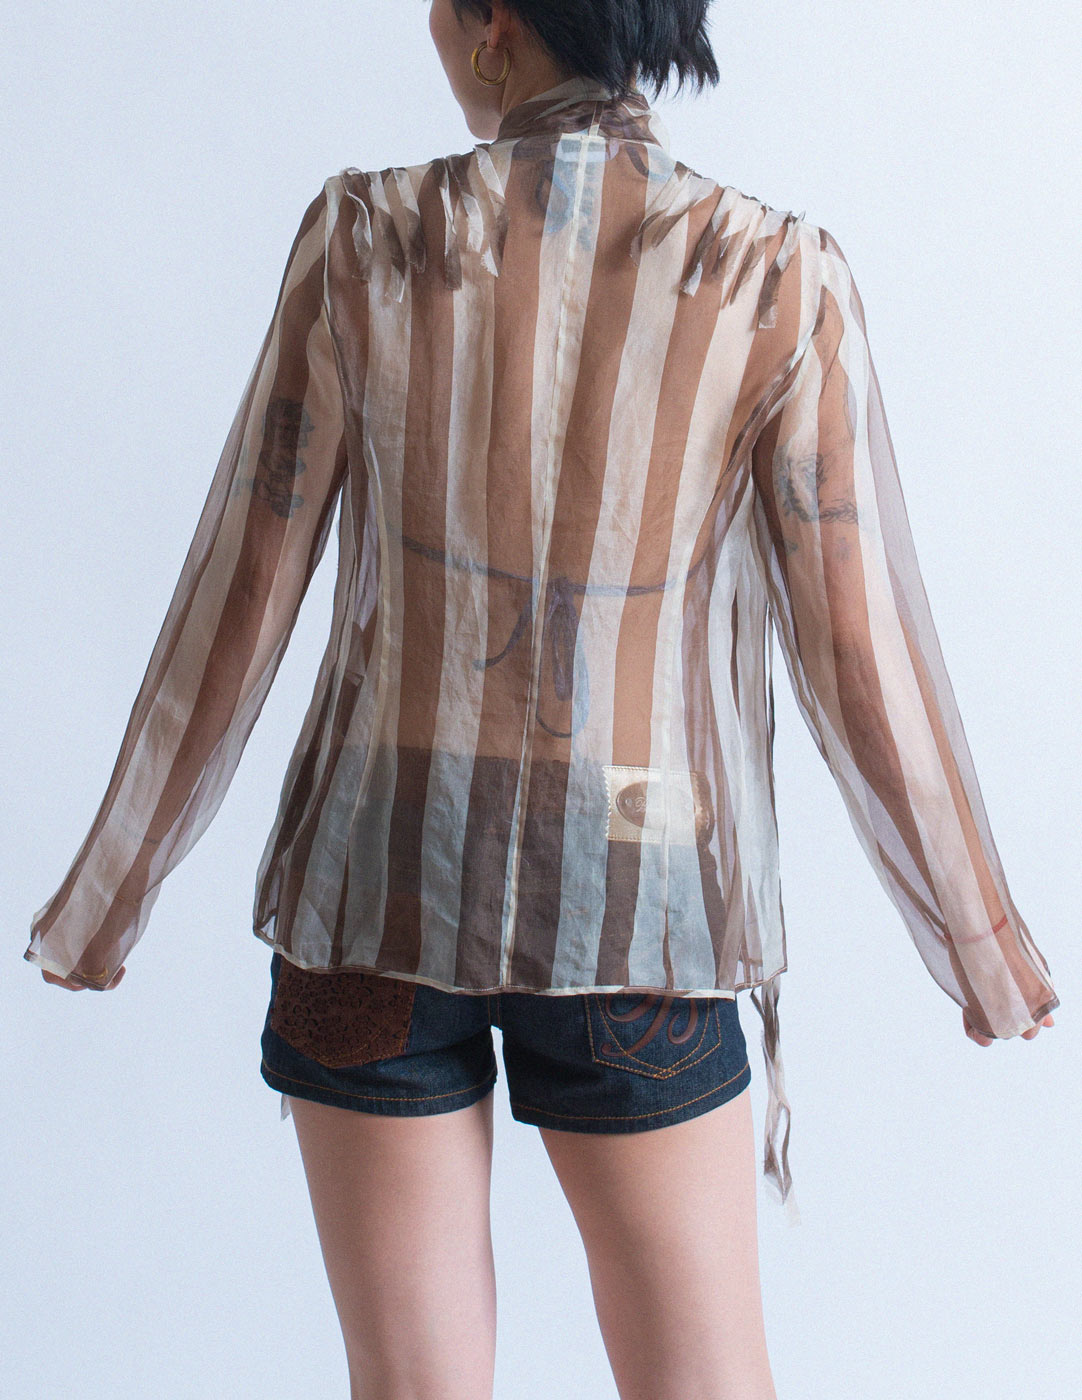 Gianfranco Ferré vintage striped sheer silk blouse back detail